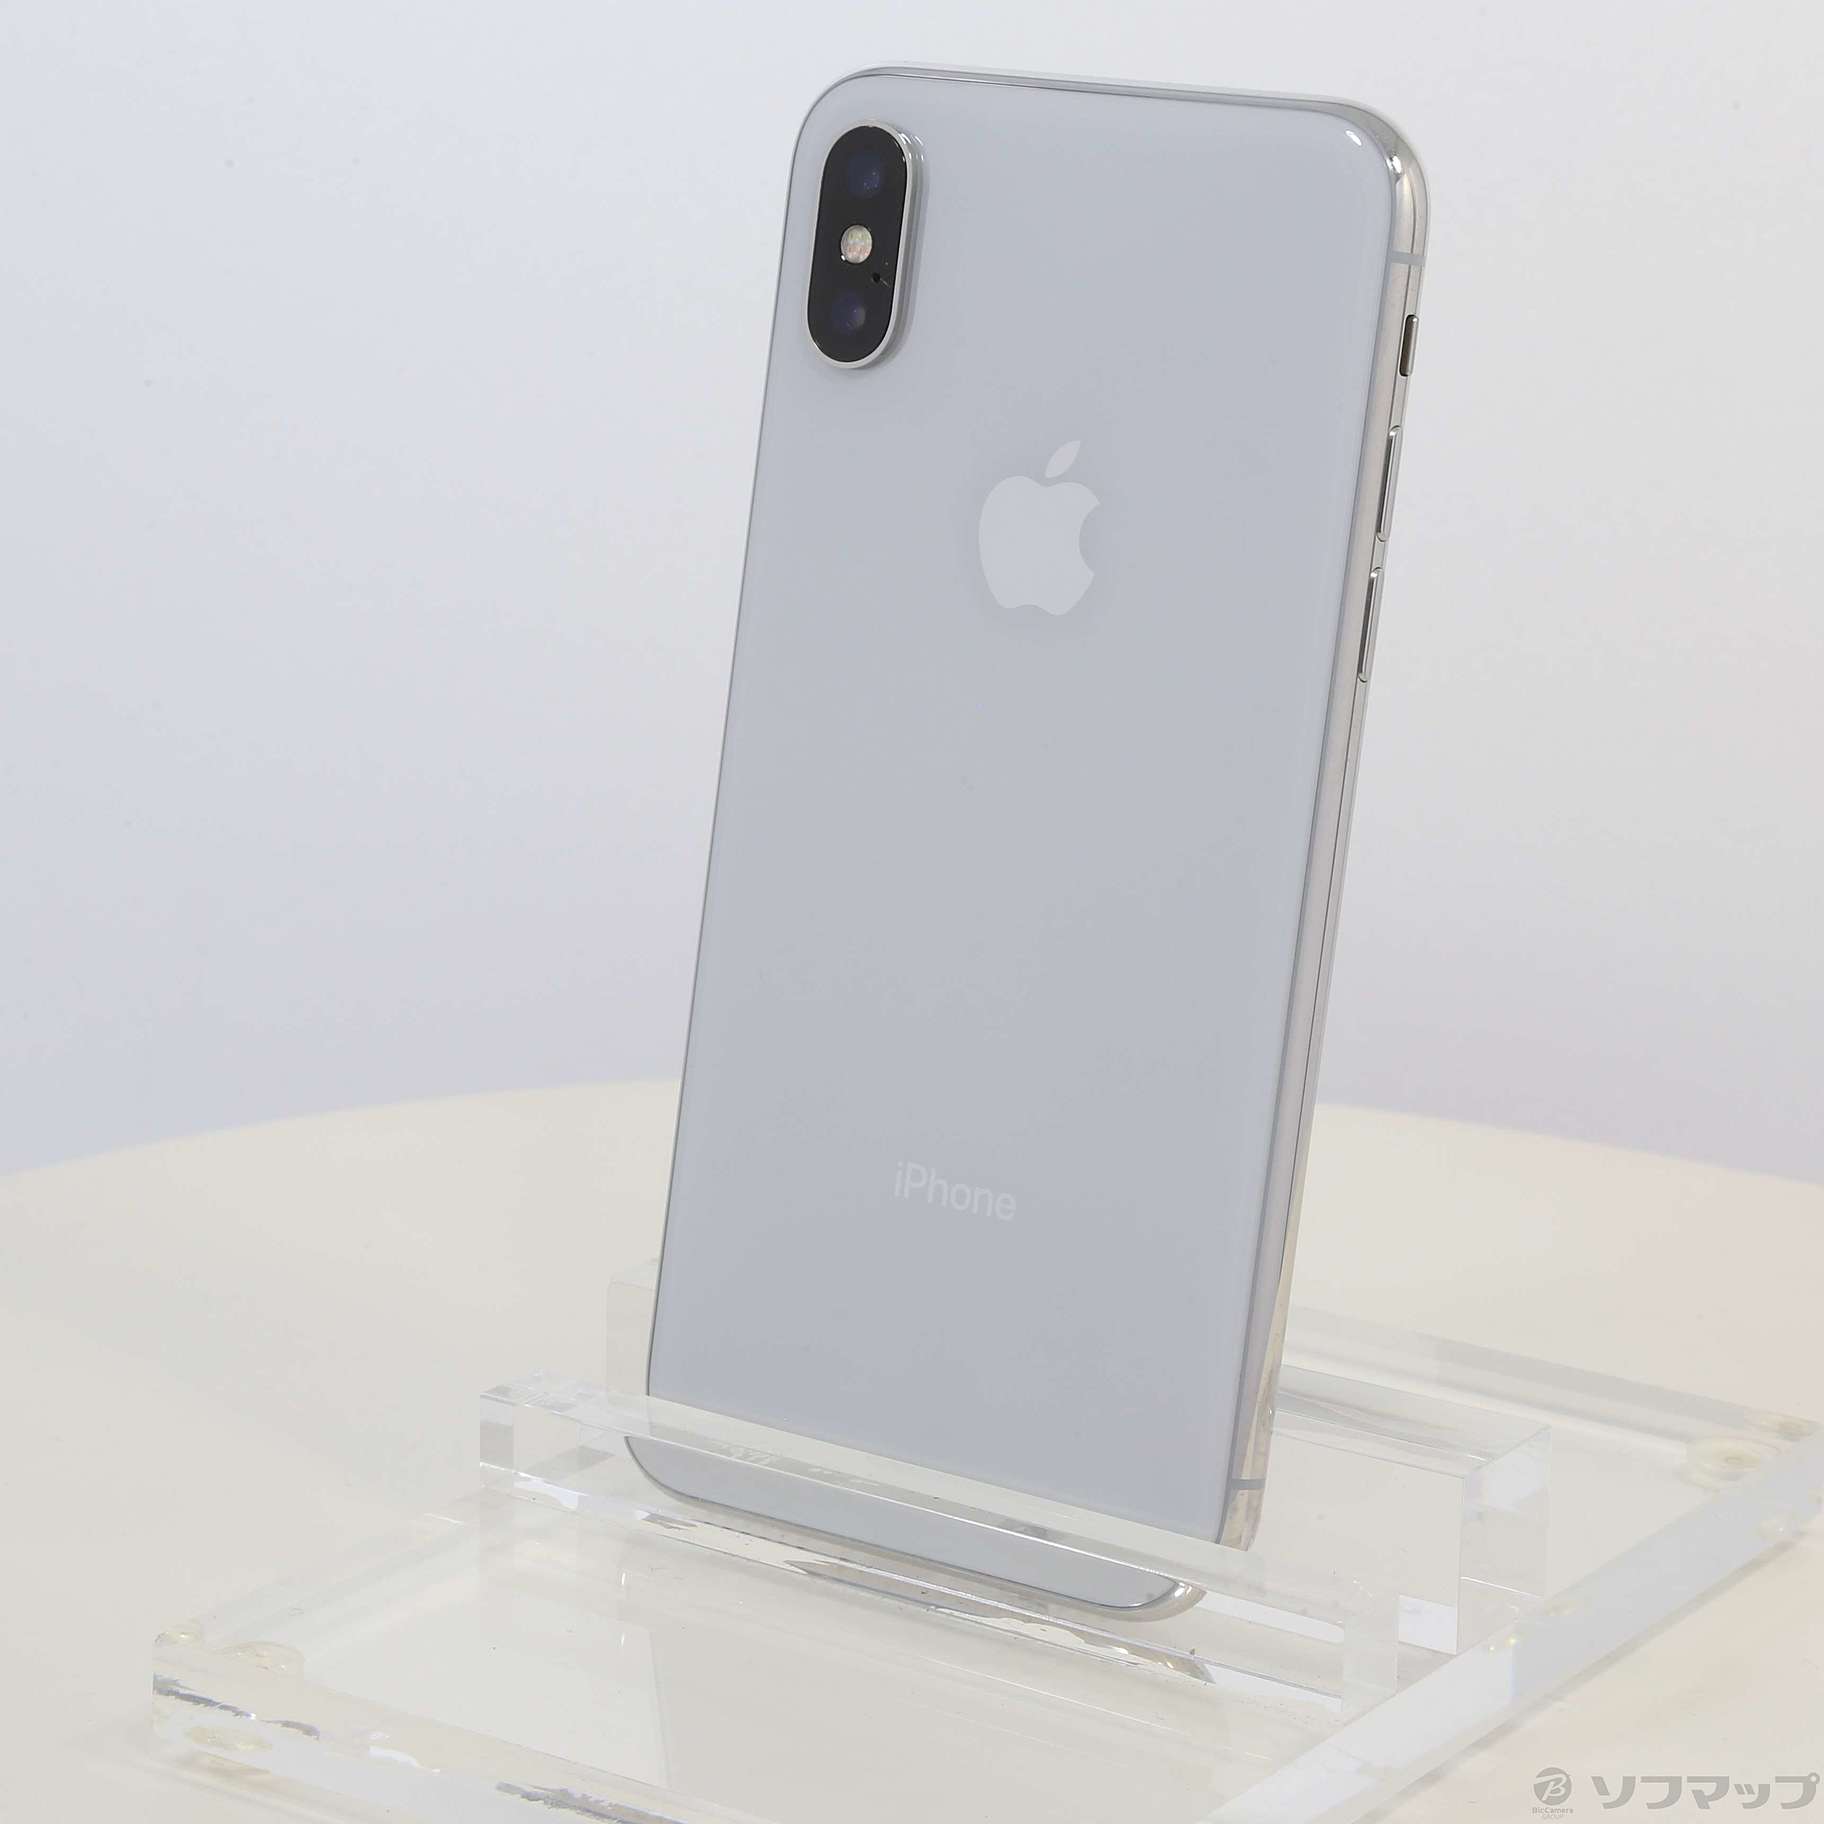 iPhone X Silver 64 GB SIMフリー ジャンク - rehda.com